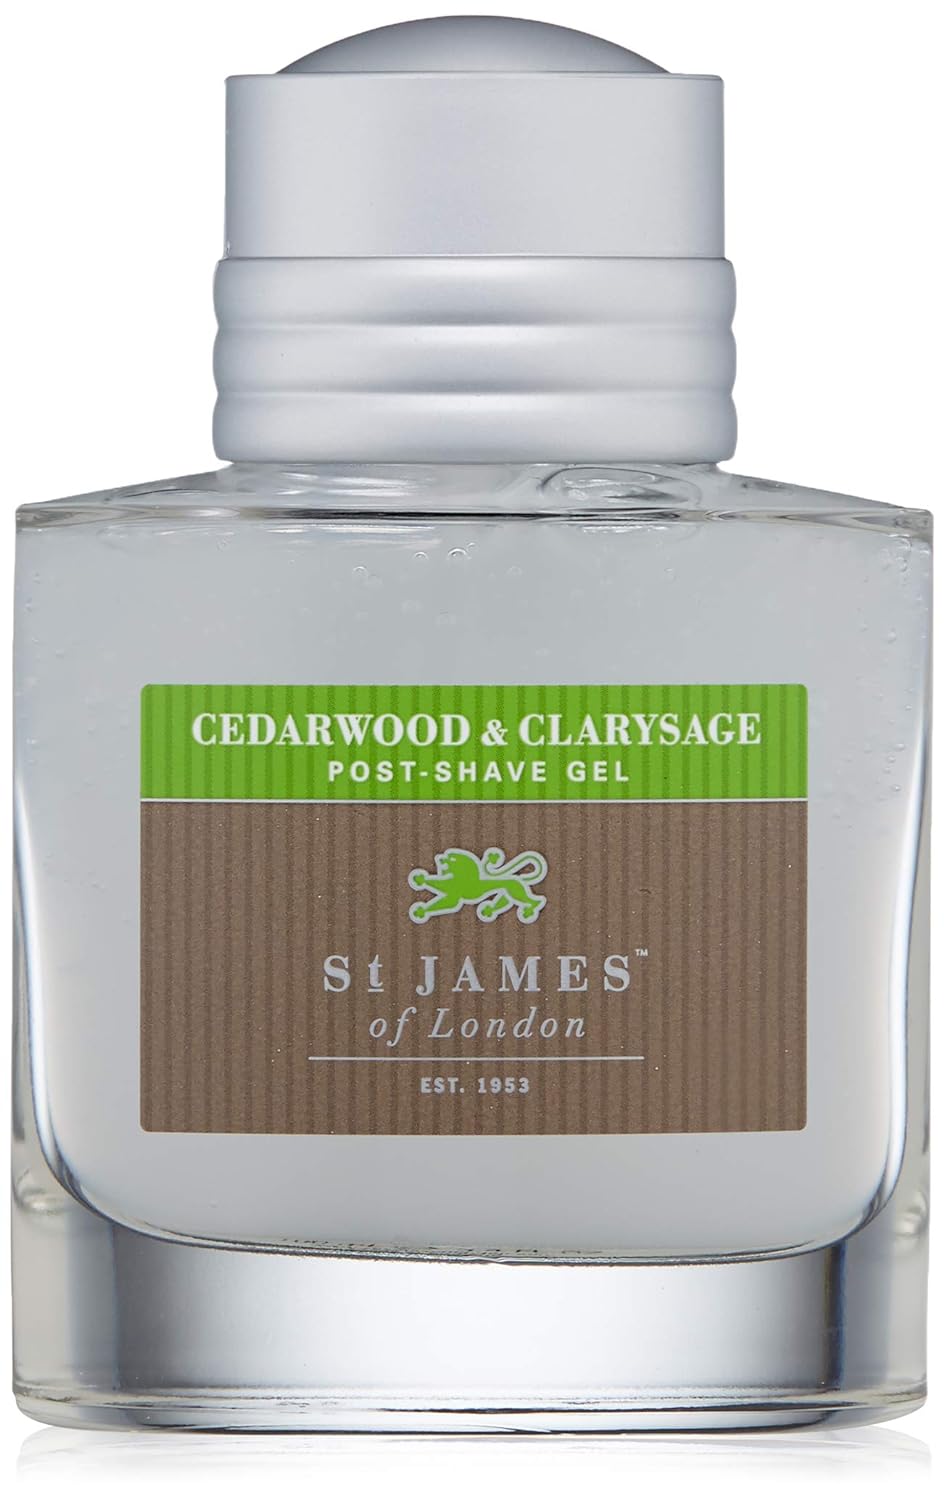 St James of London Cedarwood & Clarysage Post Shave Gel, 3.4